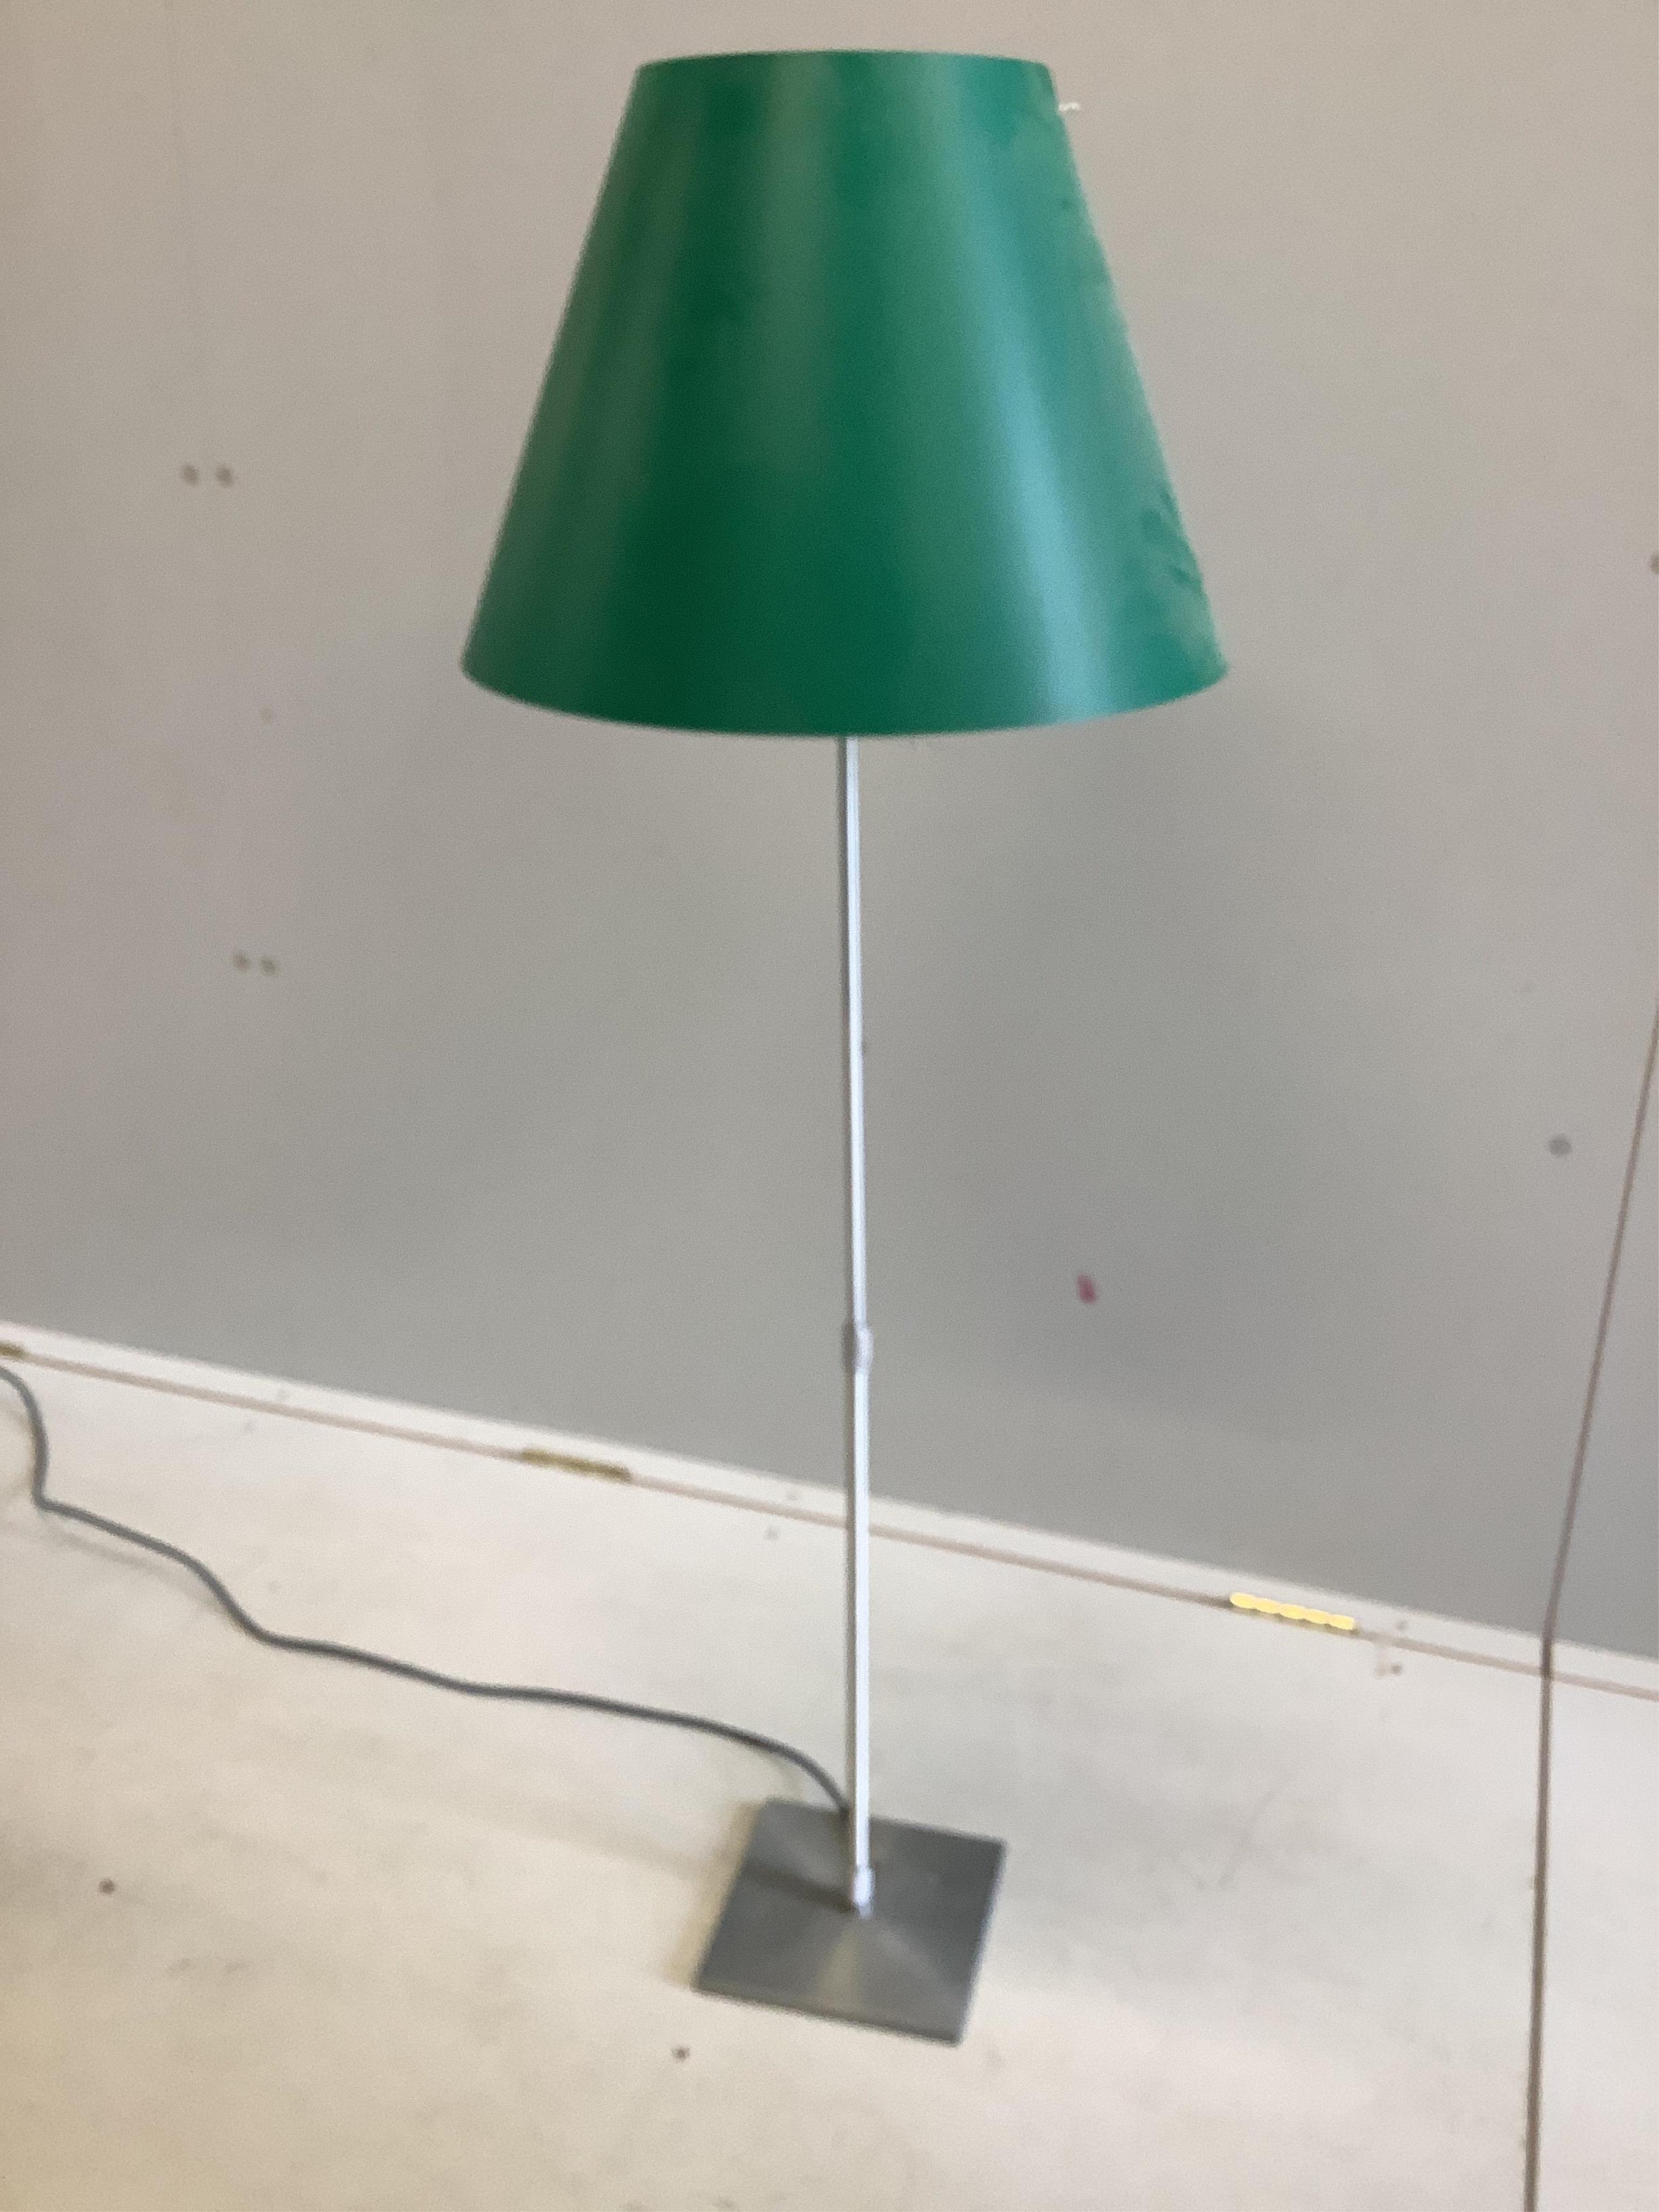 An Italian Luce Plan floor lamp